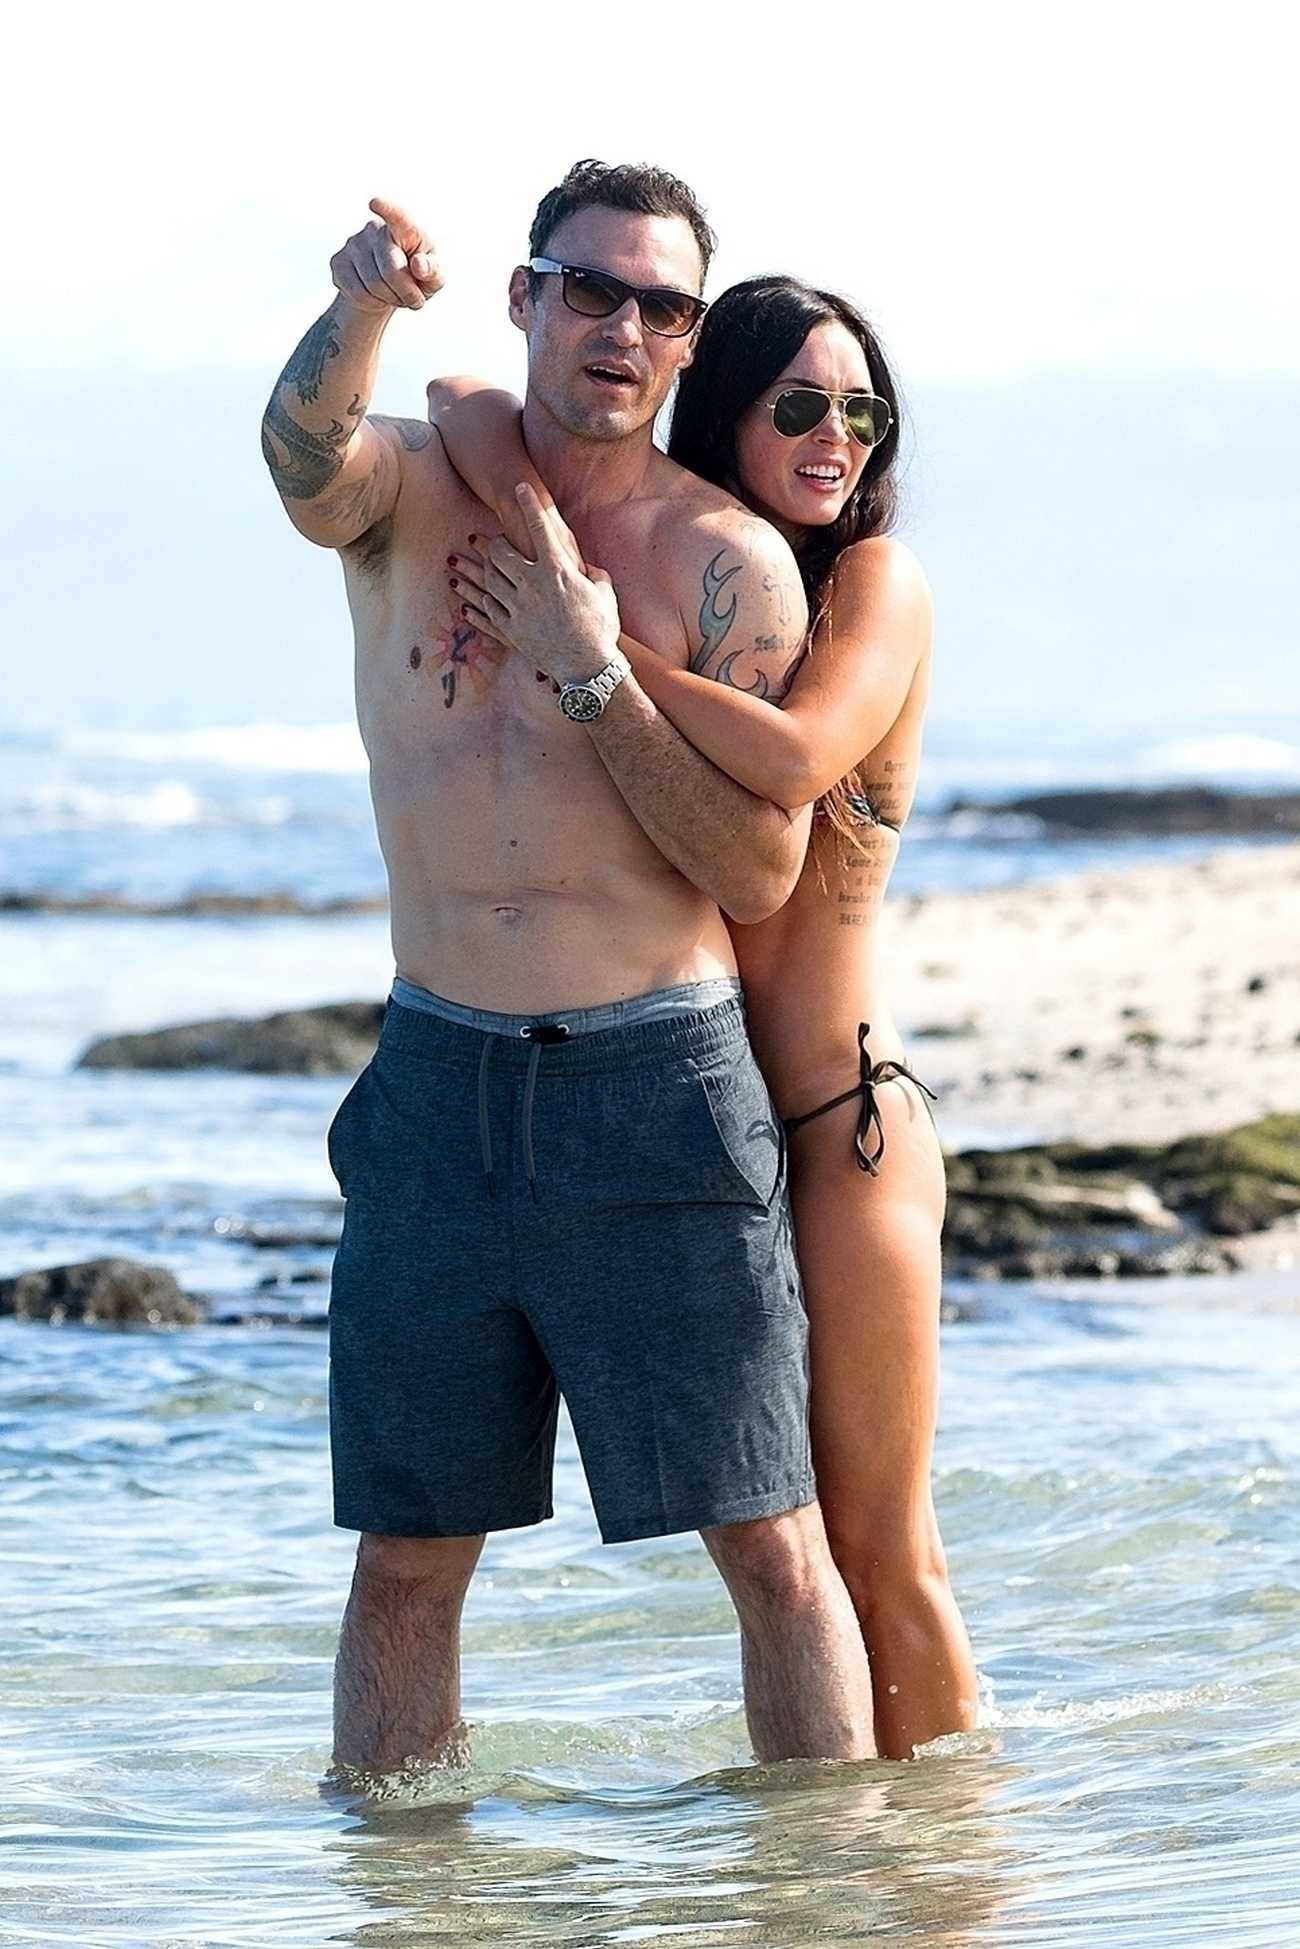 Megan_Fox_and_Brian_Austin_Green_-_Vacations_in_Hawaii_-_April_100010.jpg